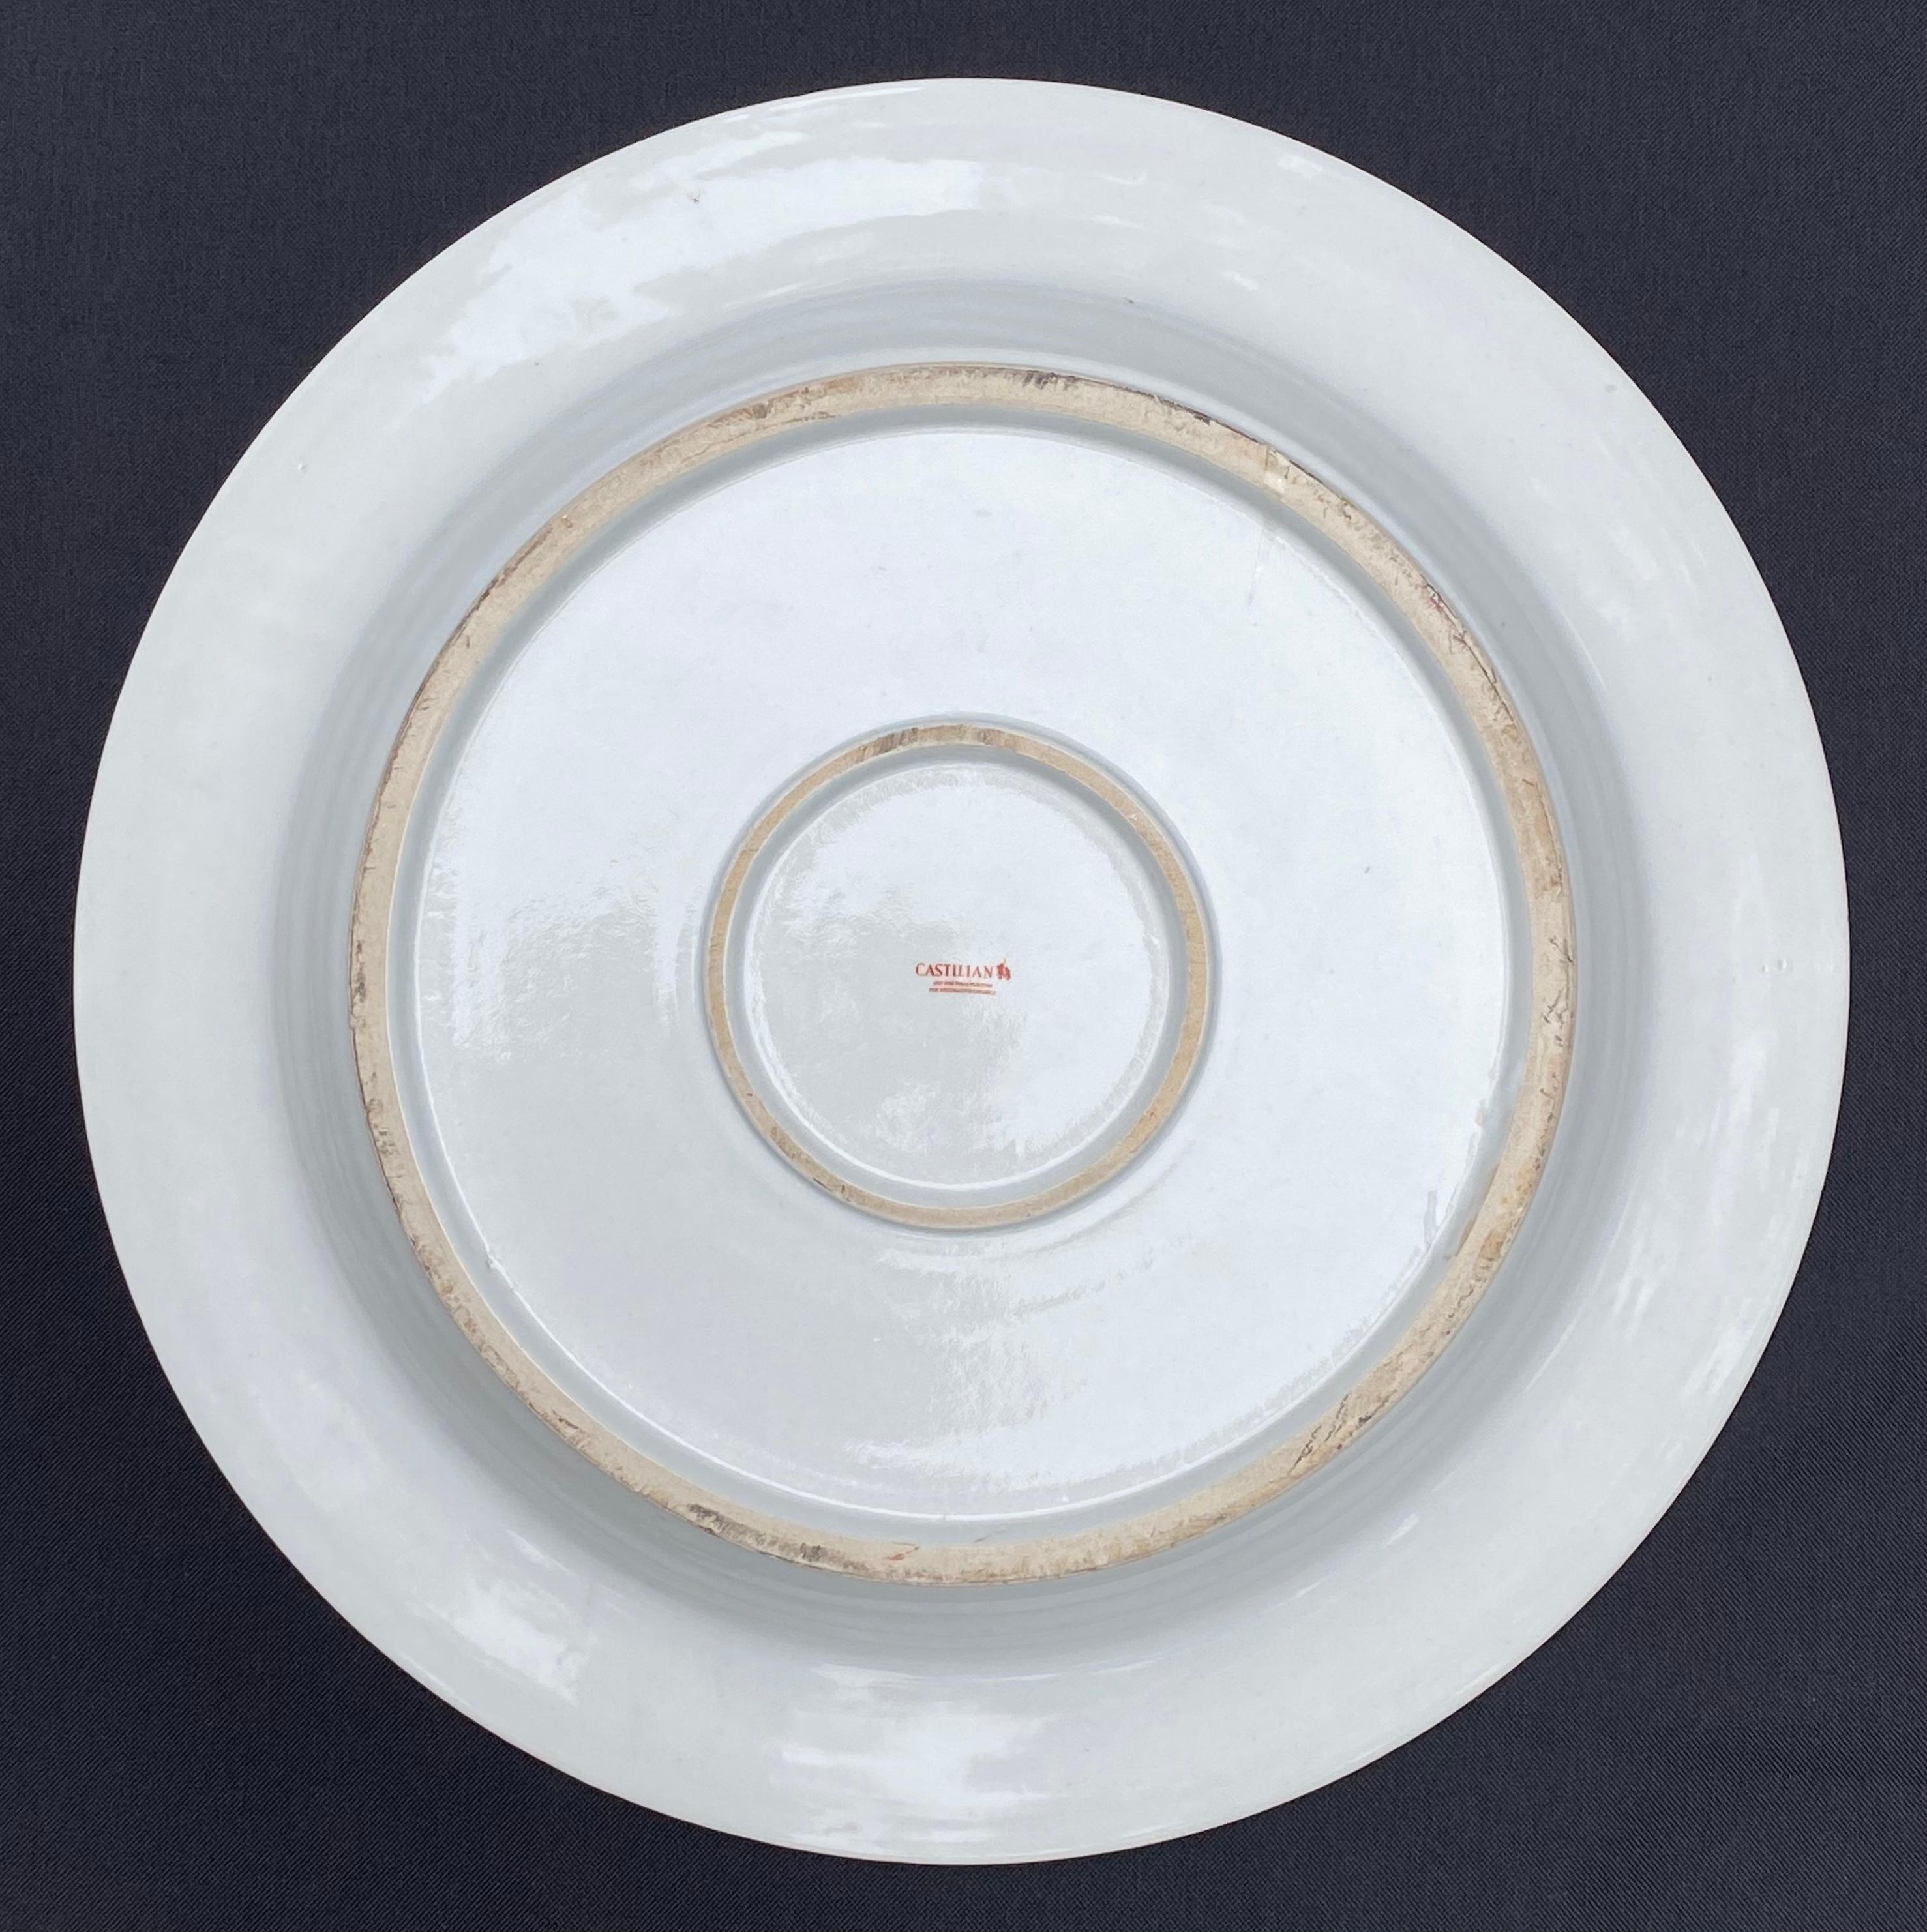 “Porcelain Charger” - Contemporary Art by Castilian